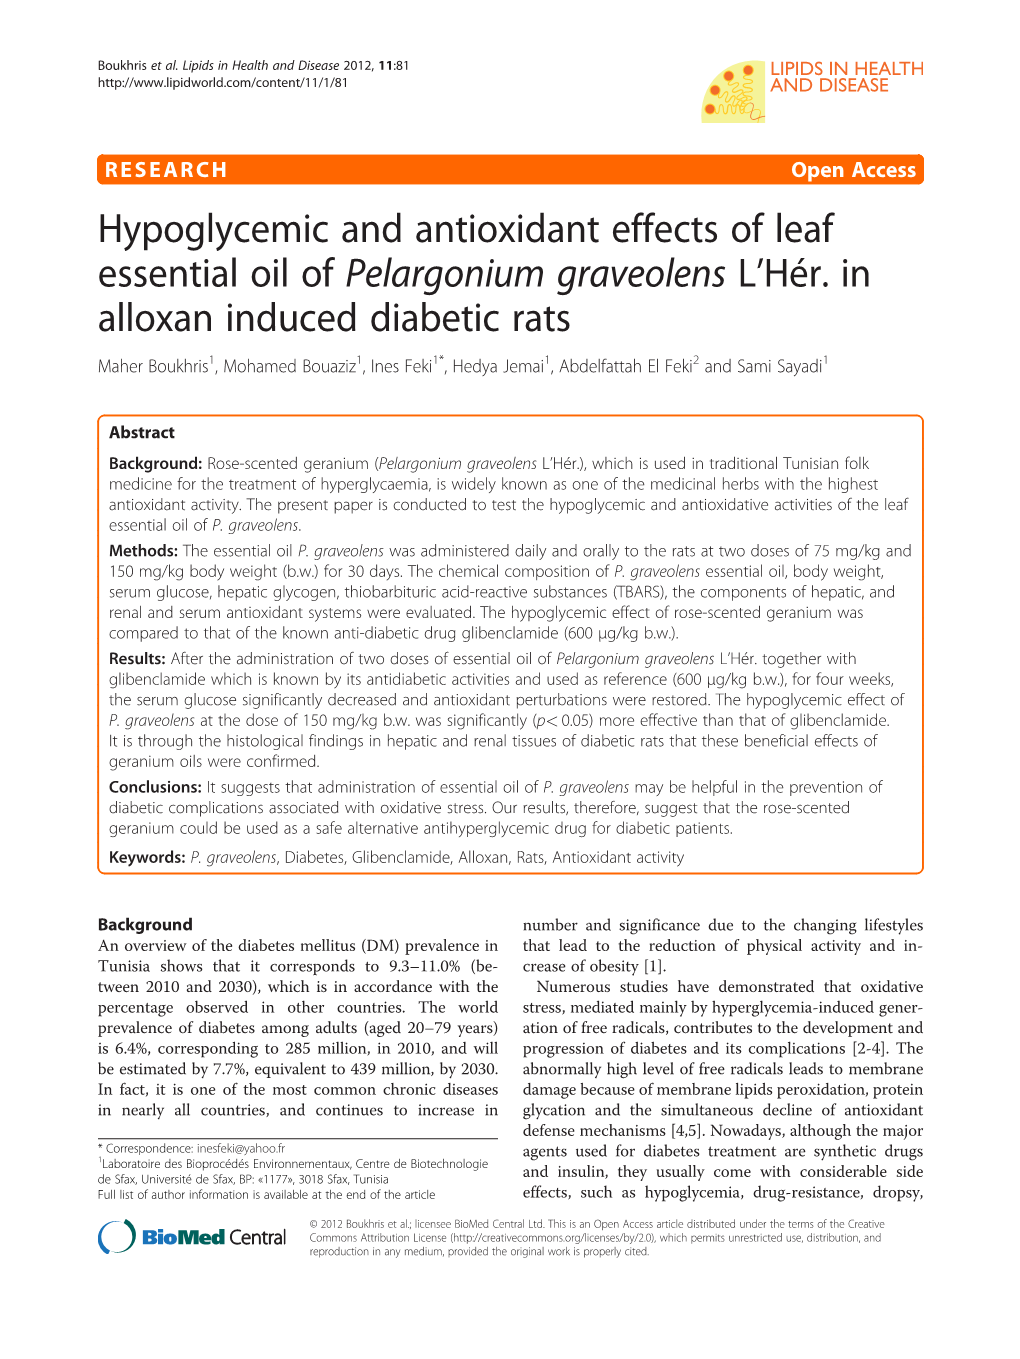 Hypoglycemic and Antioxidant Effects of Leaf Essential Oil of Pelargonium Graveolens L’Hér